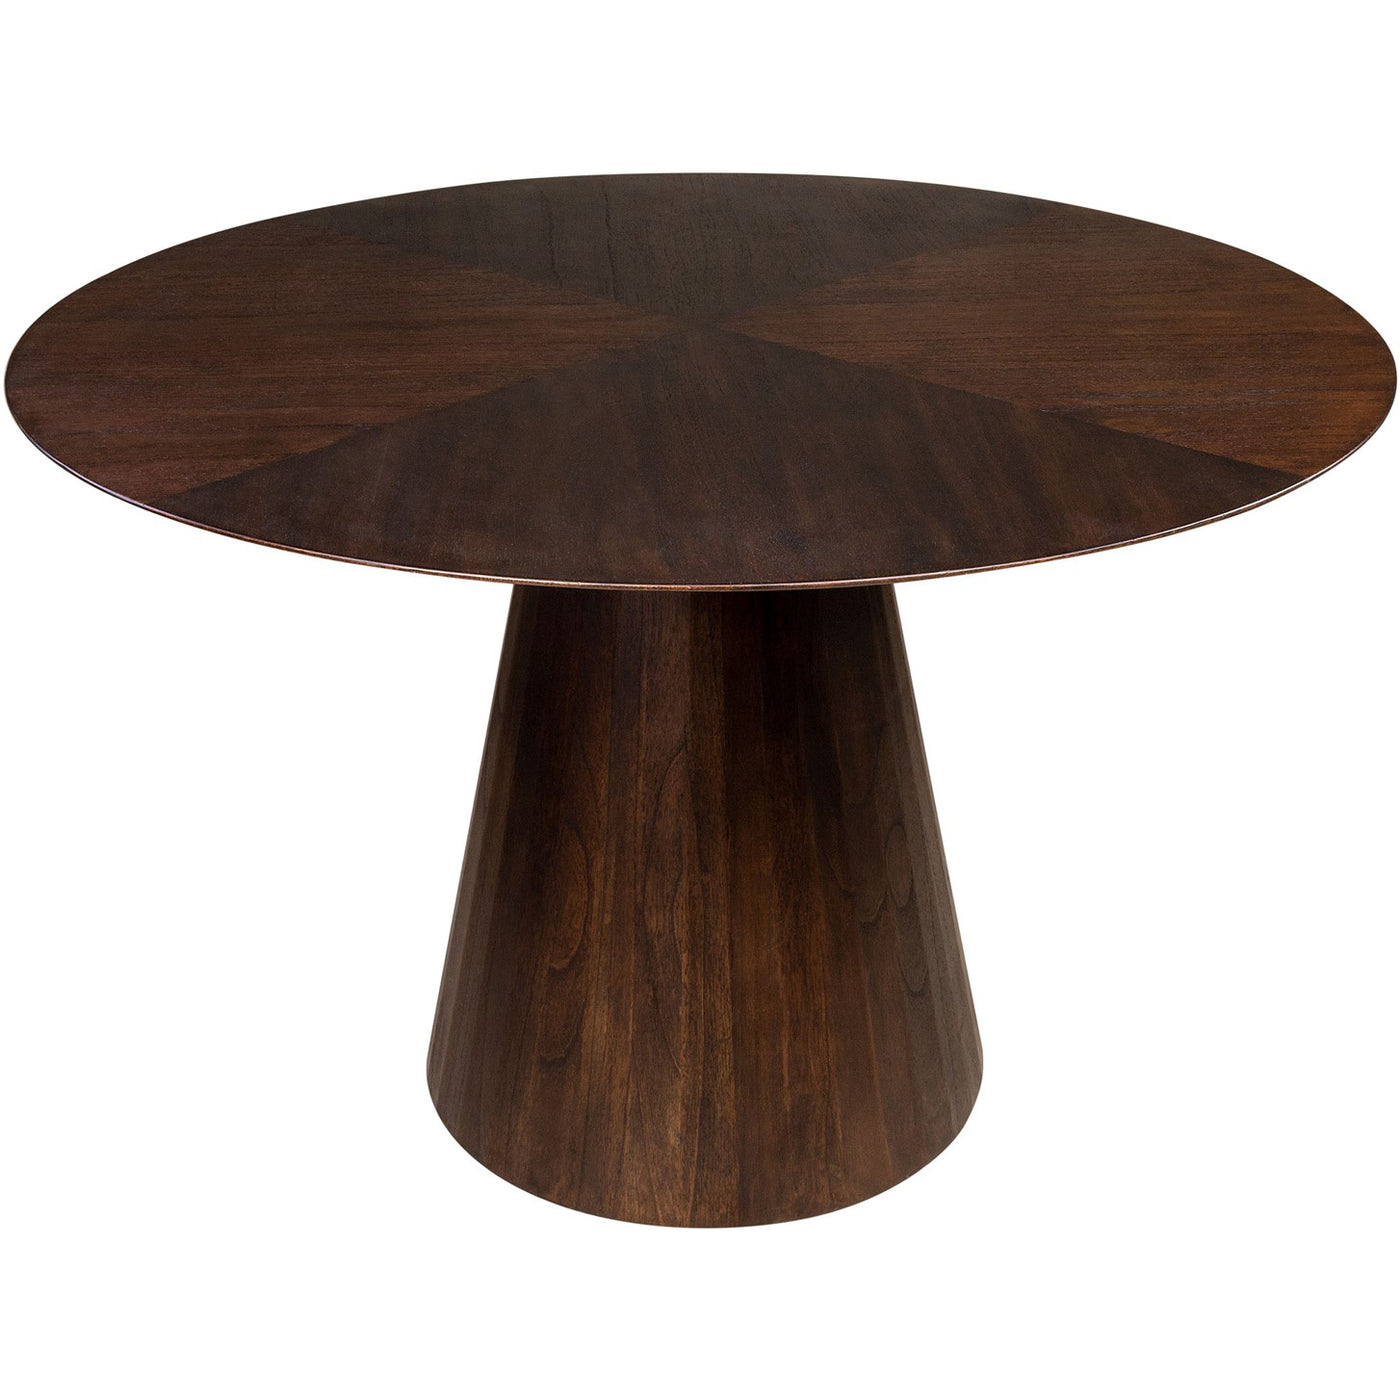 Trella Dining Table in Mindi Wood - 120cm